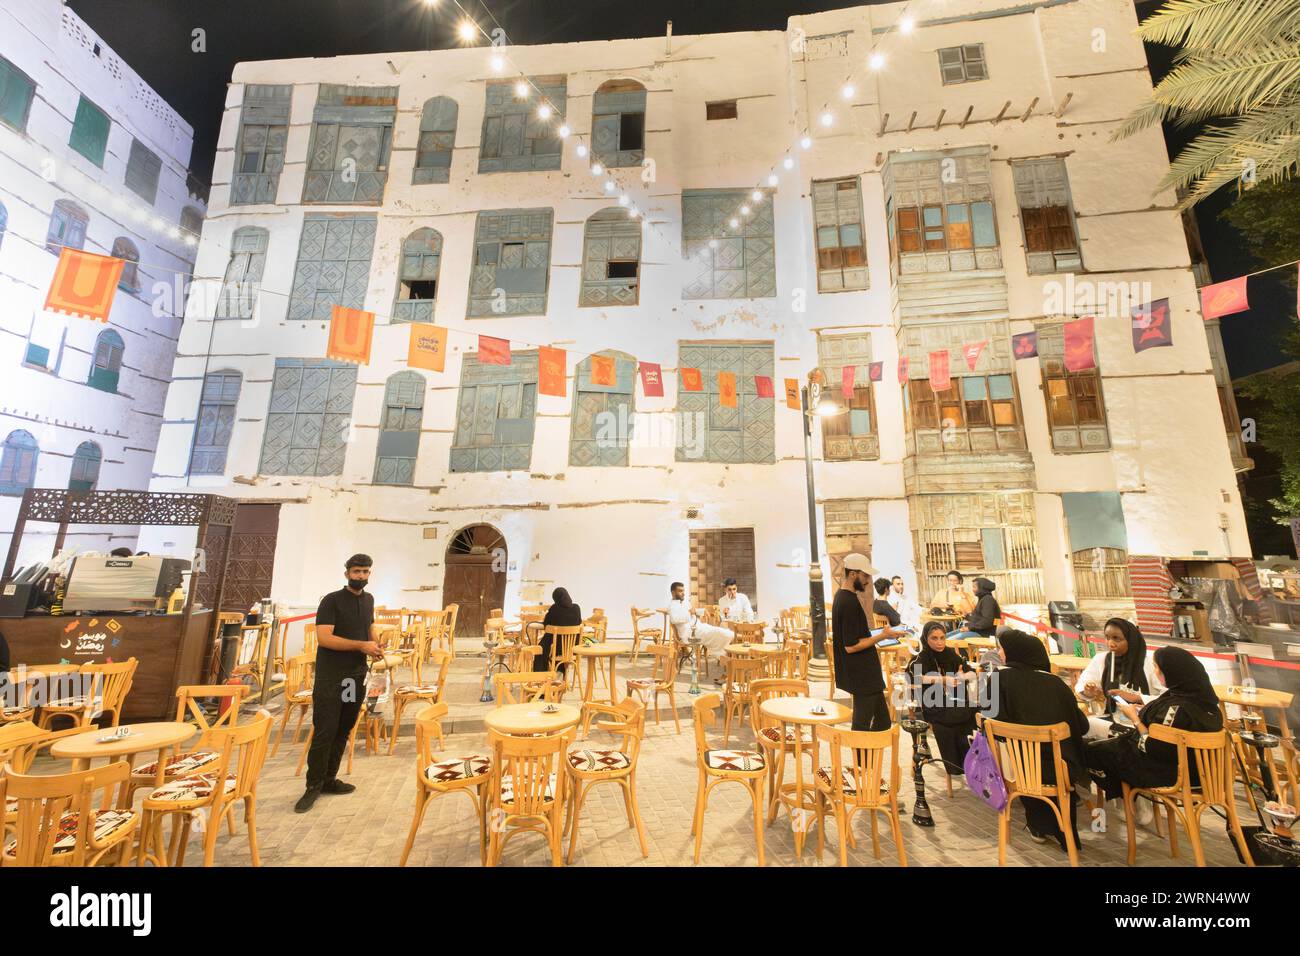 Historical urban scene with outdoor cafe setting, Jeddah, Saudi Arabia Stock Photo